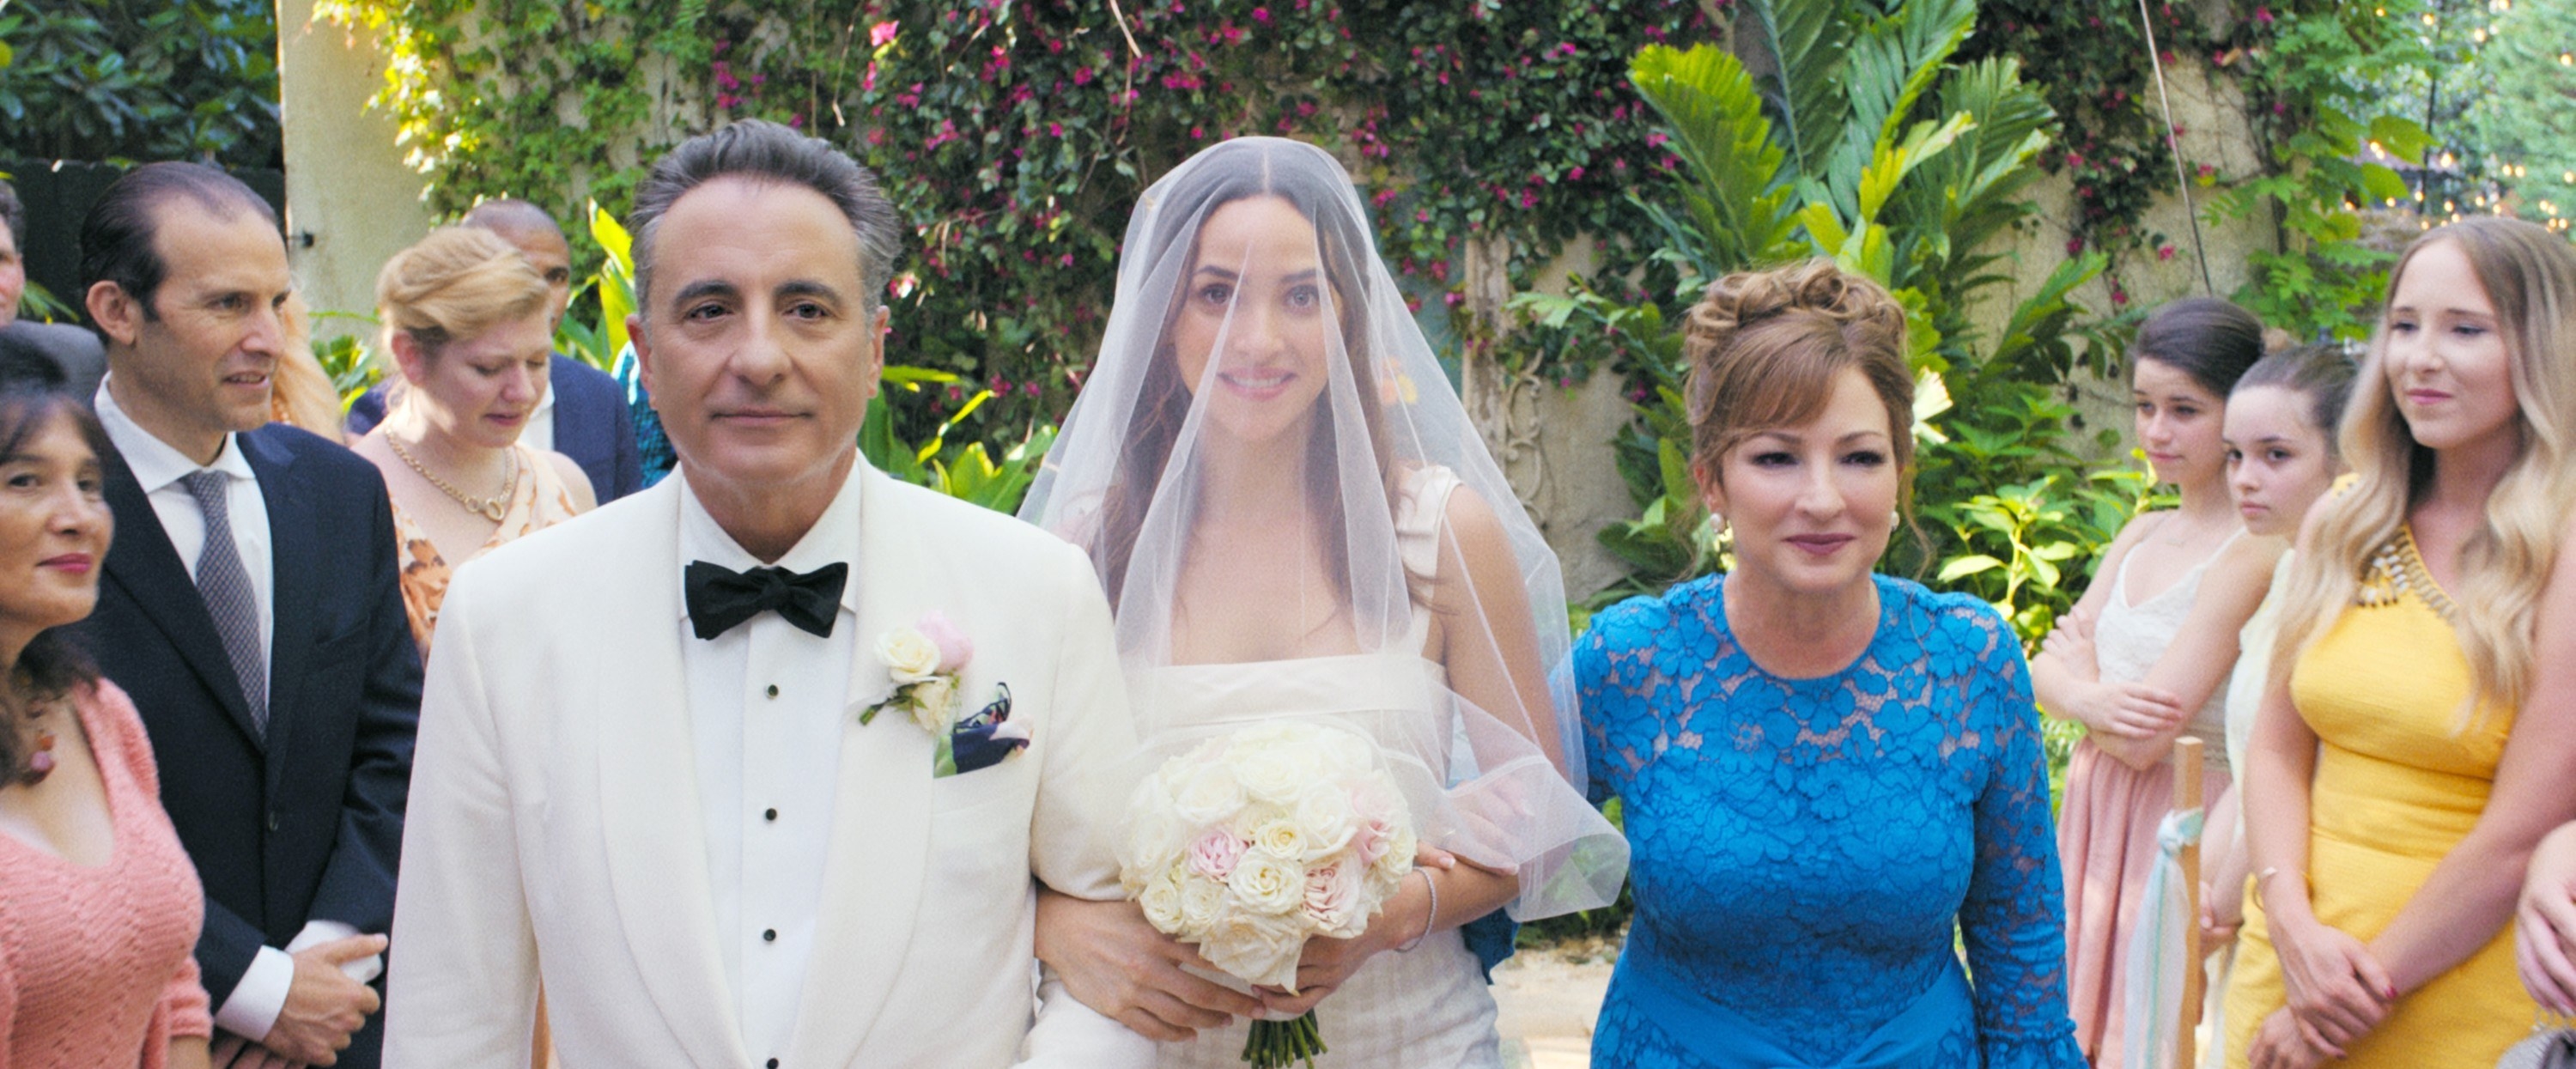 Andy Garcia, Adria Arjona, Gloria Estefan walking down the aisle at a wedding